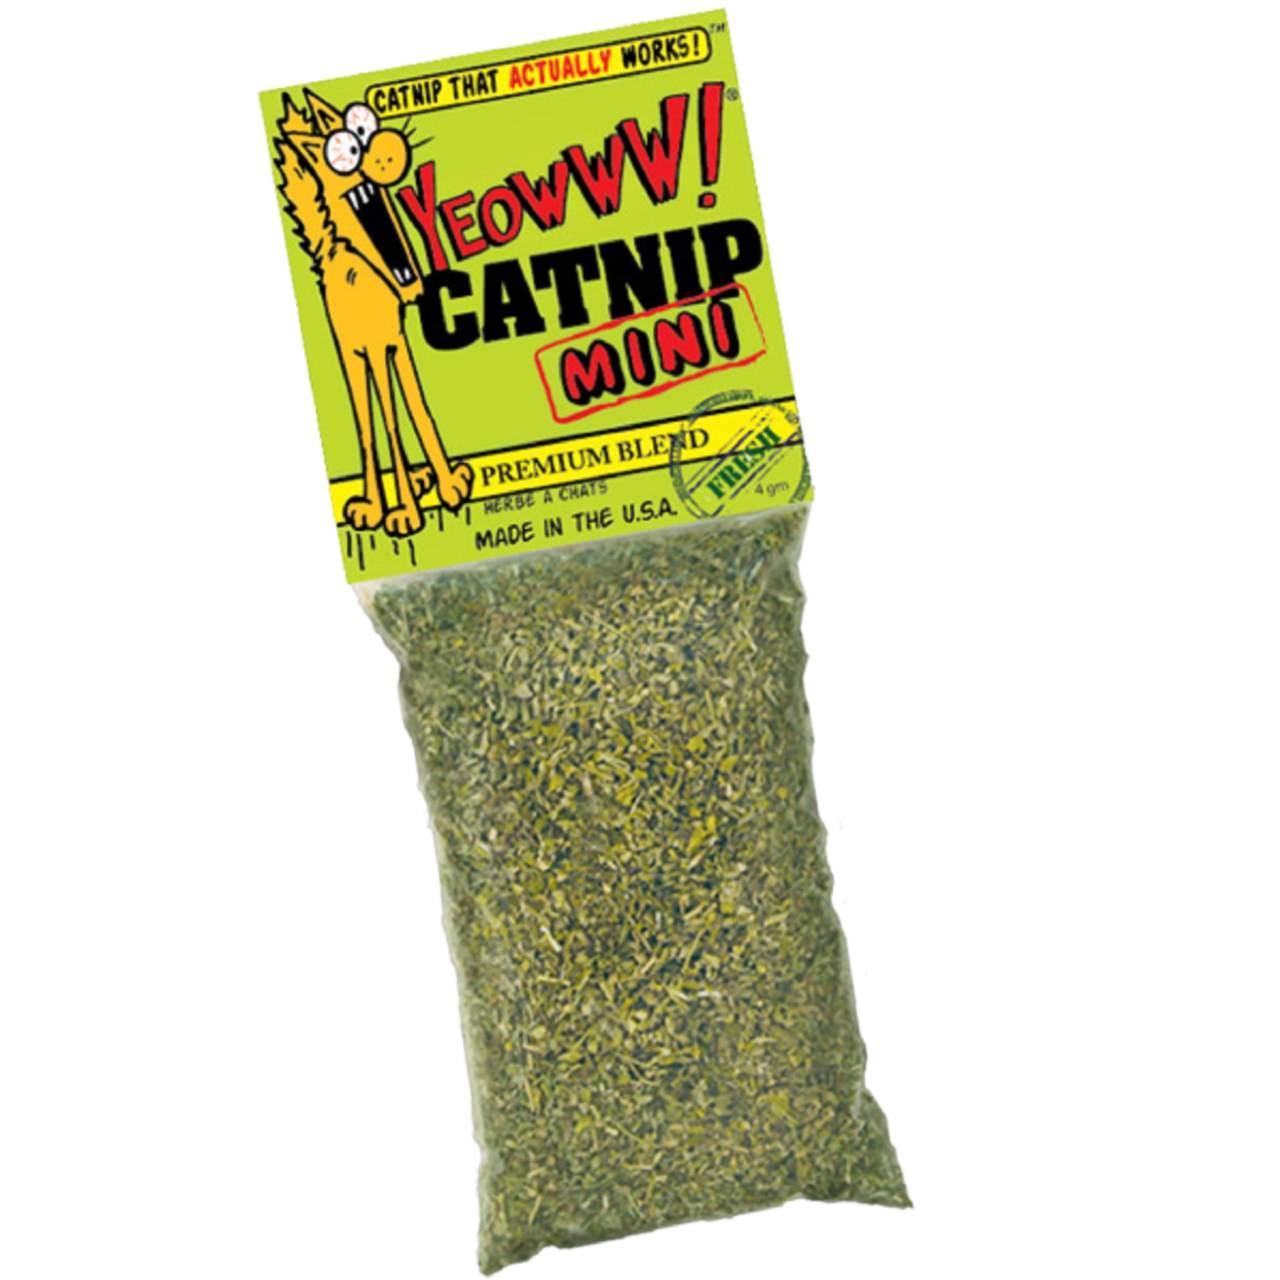 An image of Yeowww Catnip Mini's